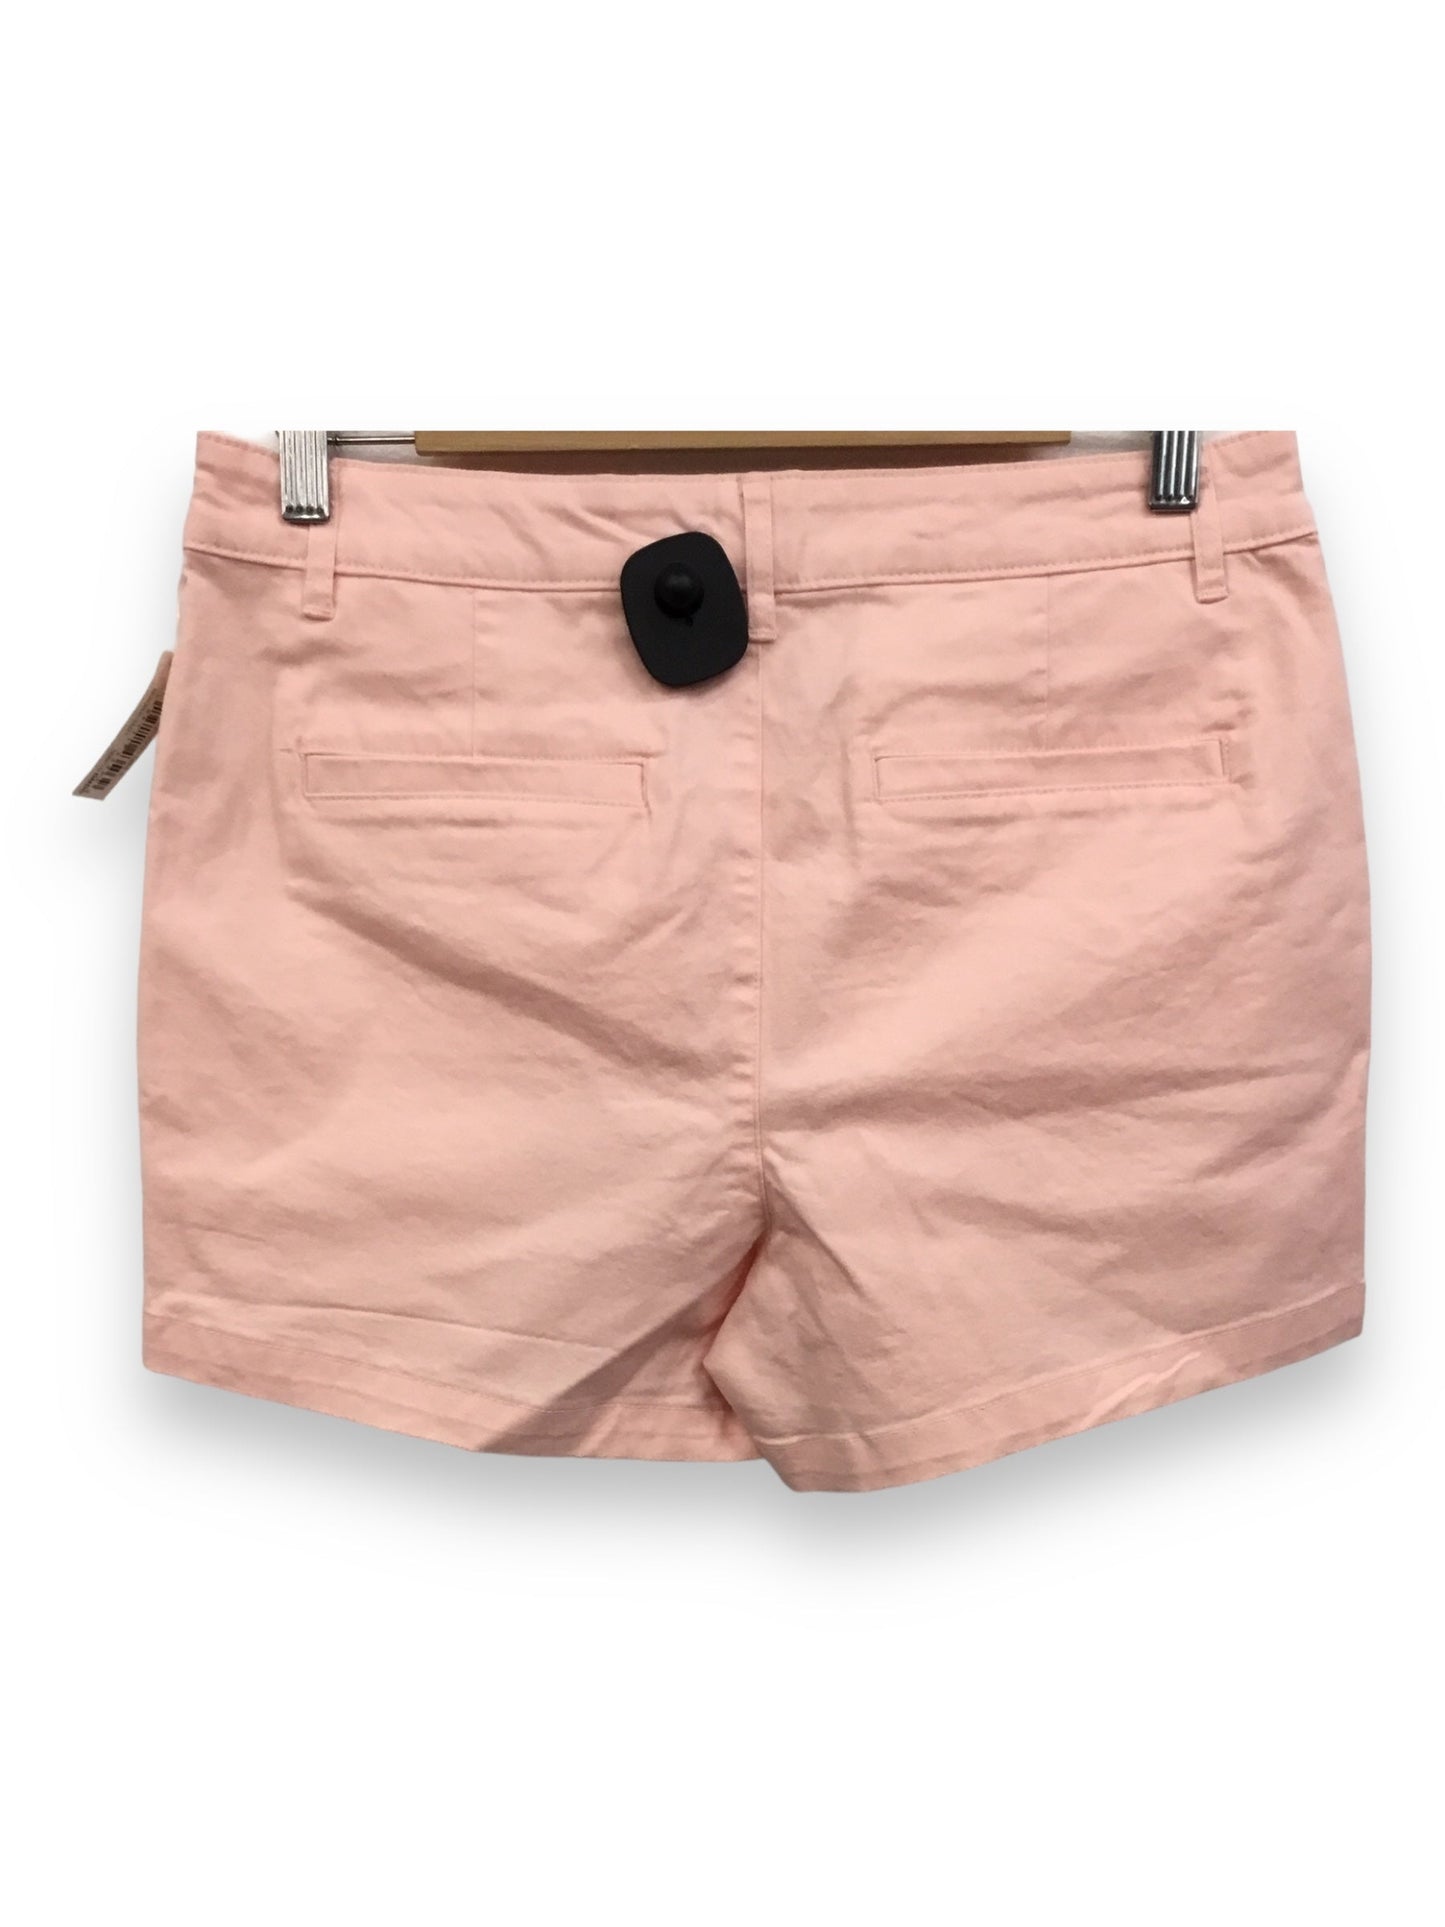 Pink Shorts Amazon Essentials, Size 8